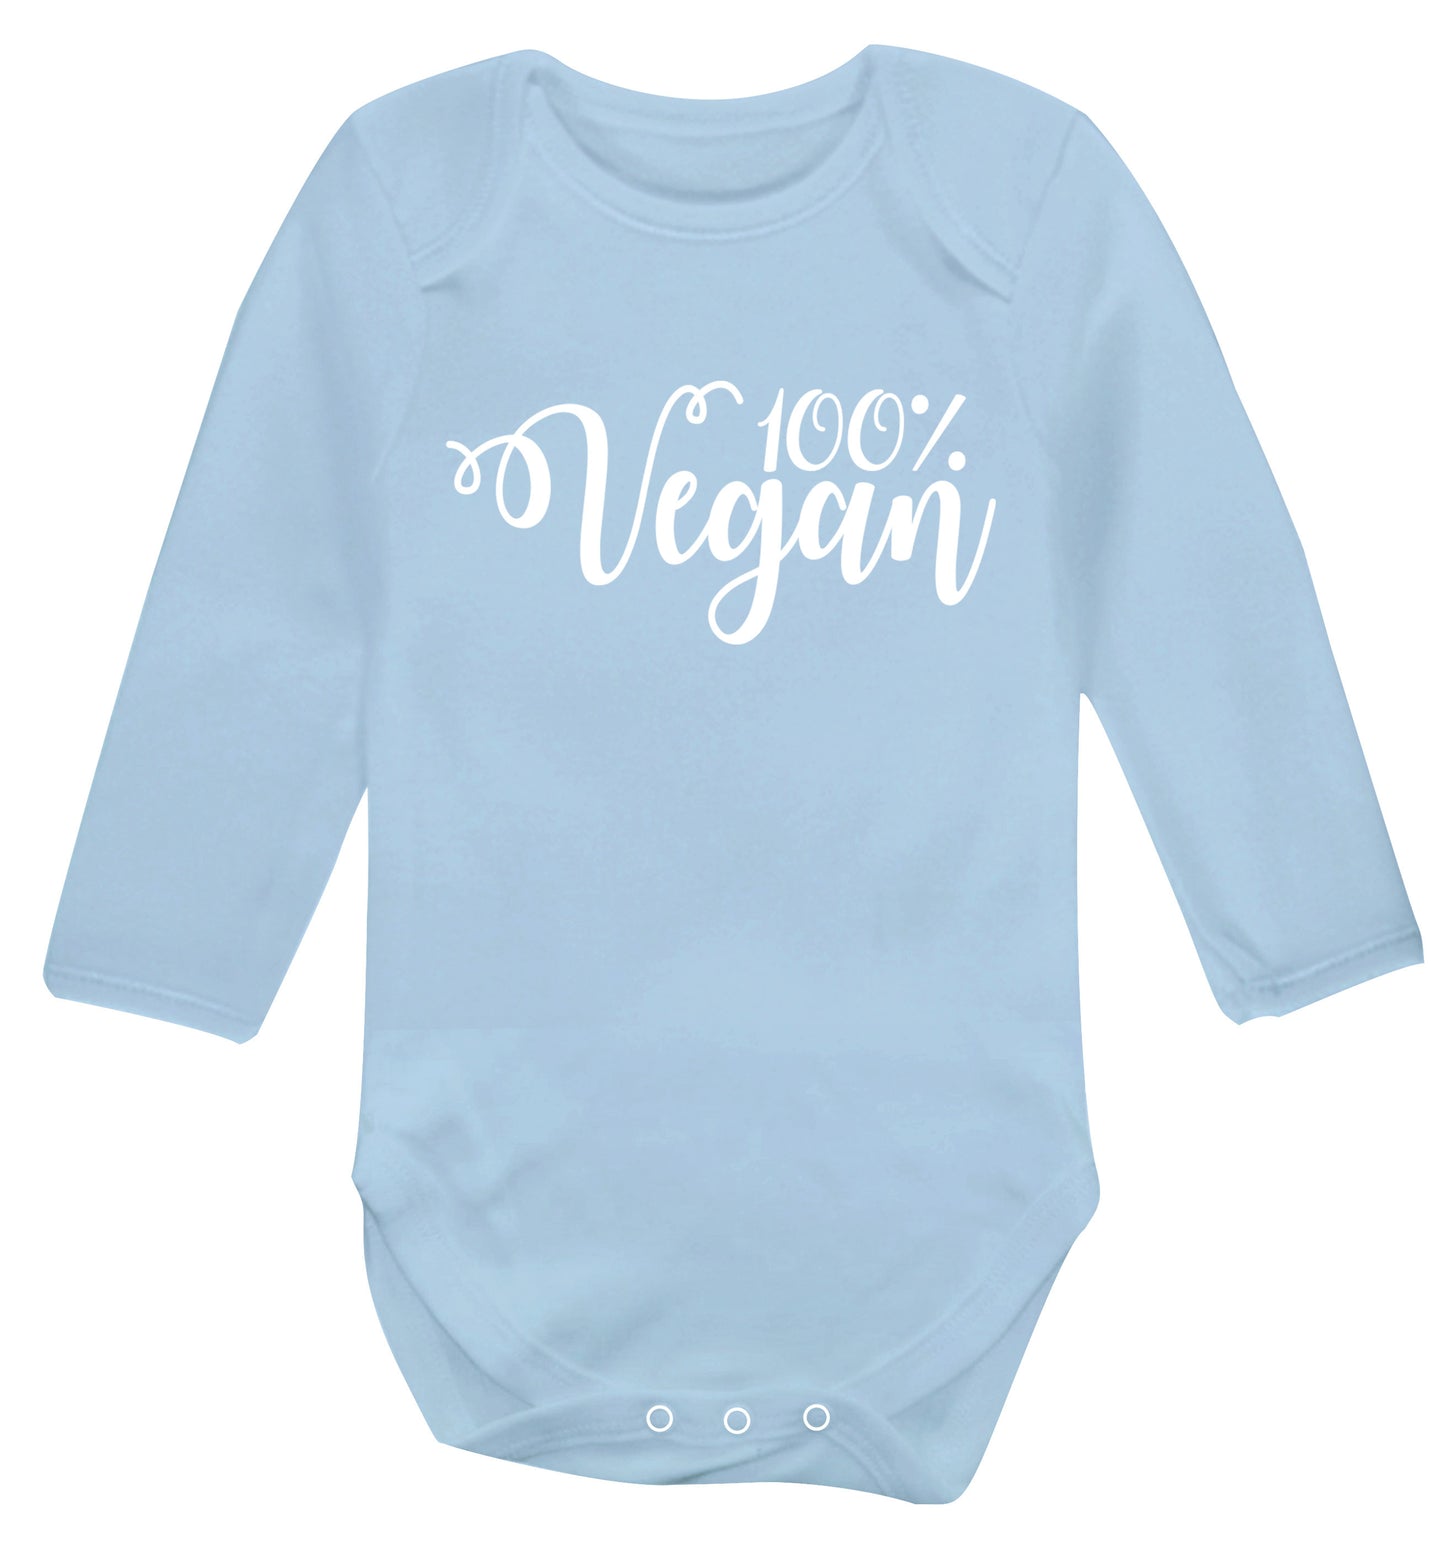 100% Vegan Baby Vest long sleeved pale blue 6-12 months